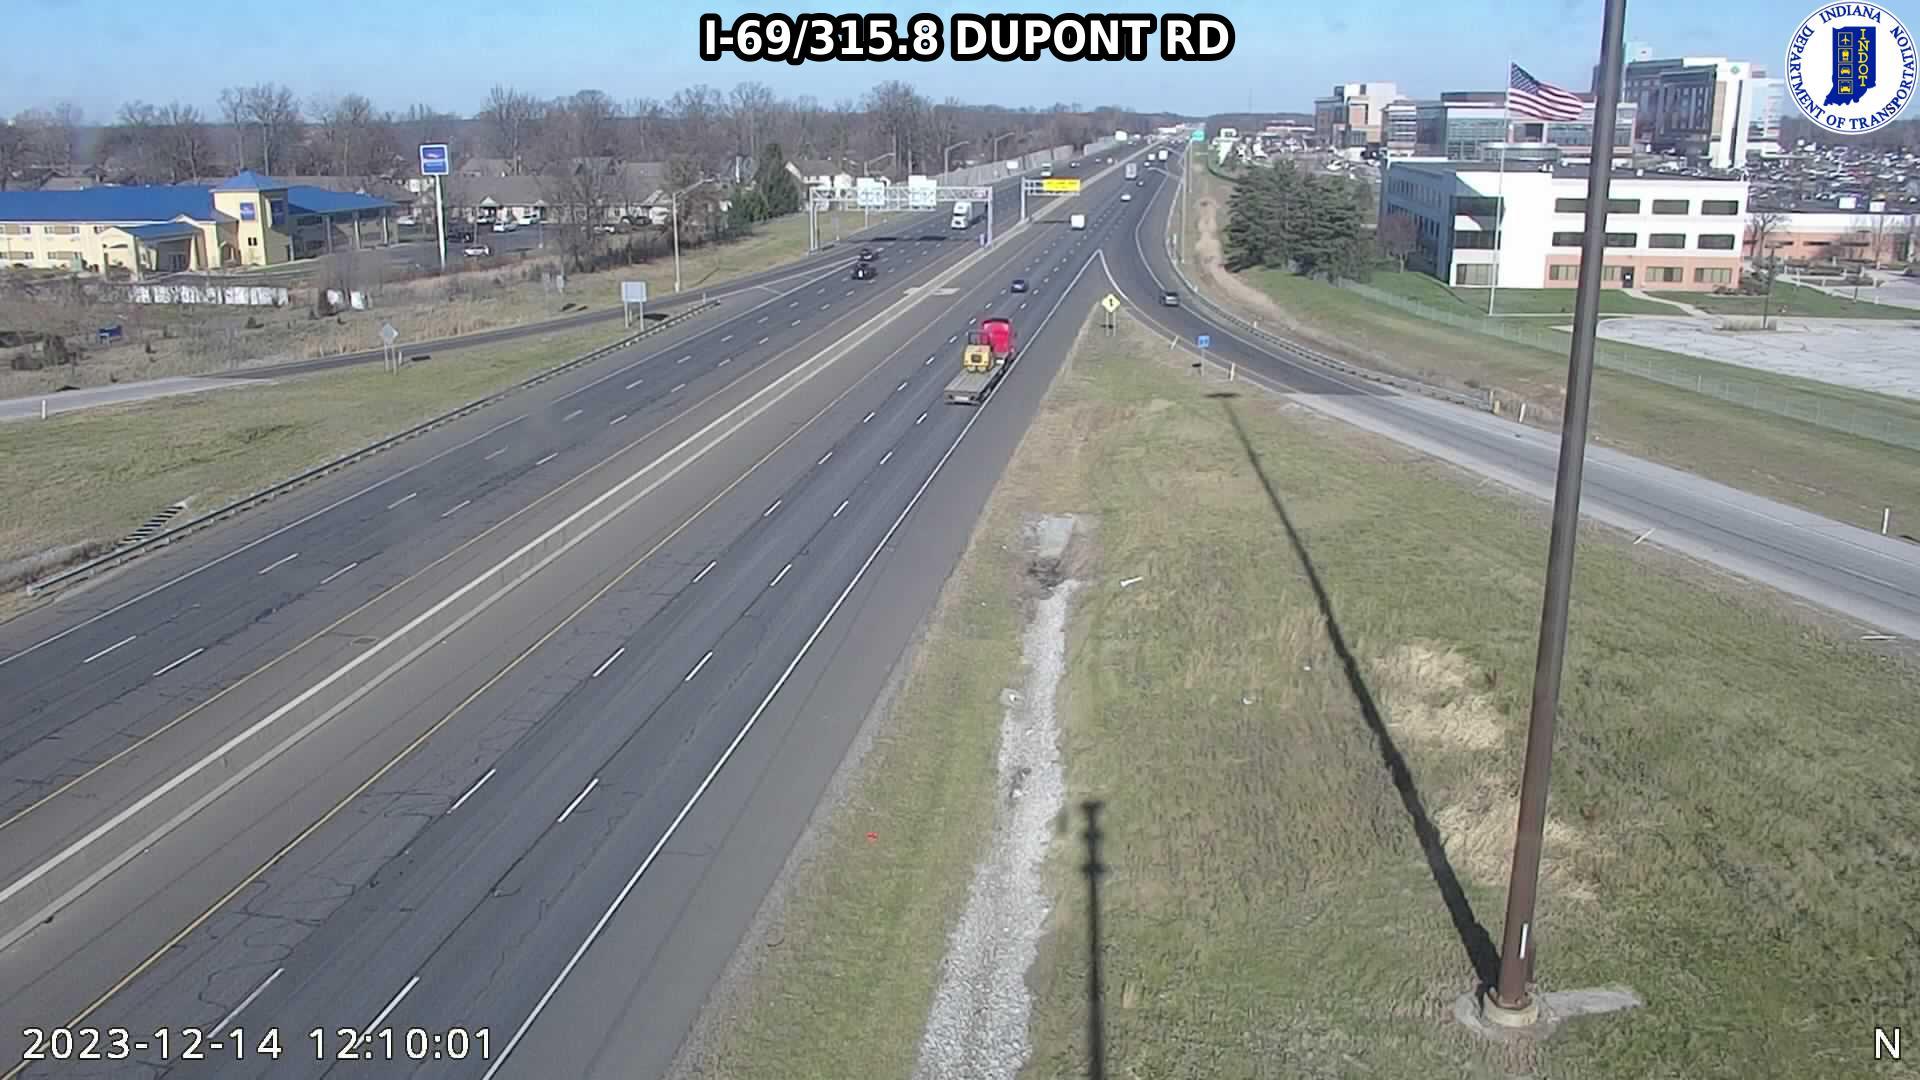 Traffic Cam Fort Wayne: I-69: I-69/315.8 DUPONT RD Player